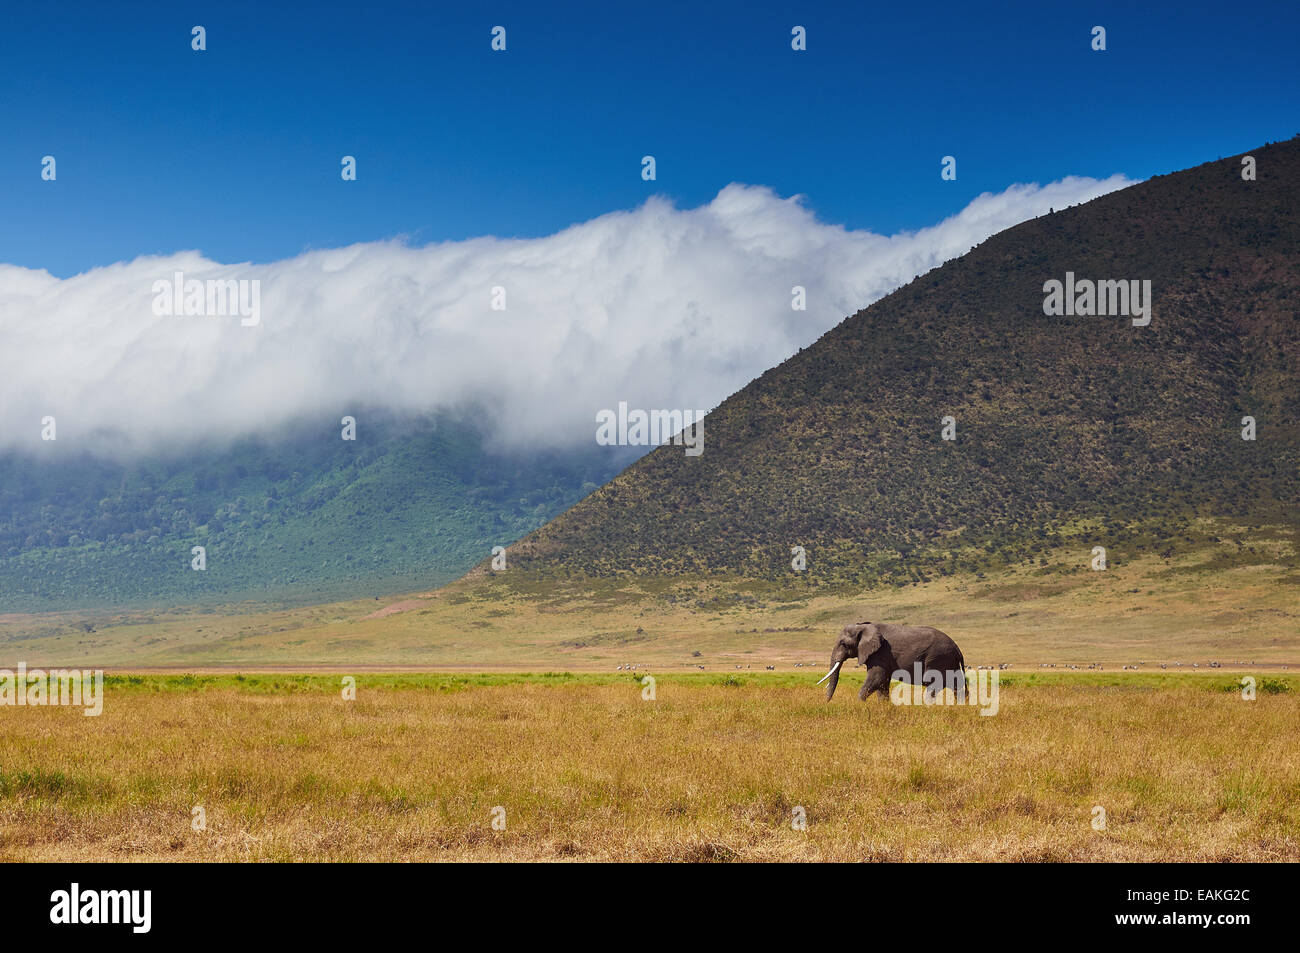 A large male elephant walking in the savannah in Ngorongoro Tanzania Stock Photo